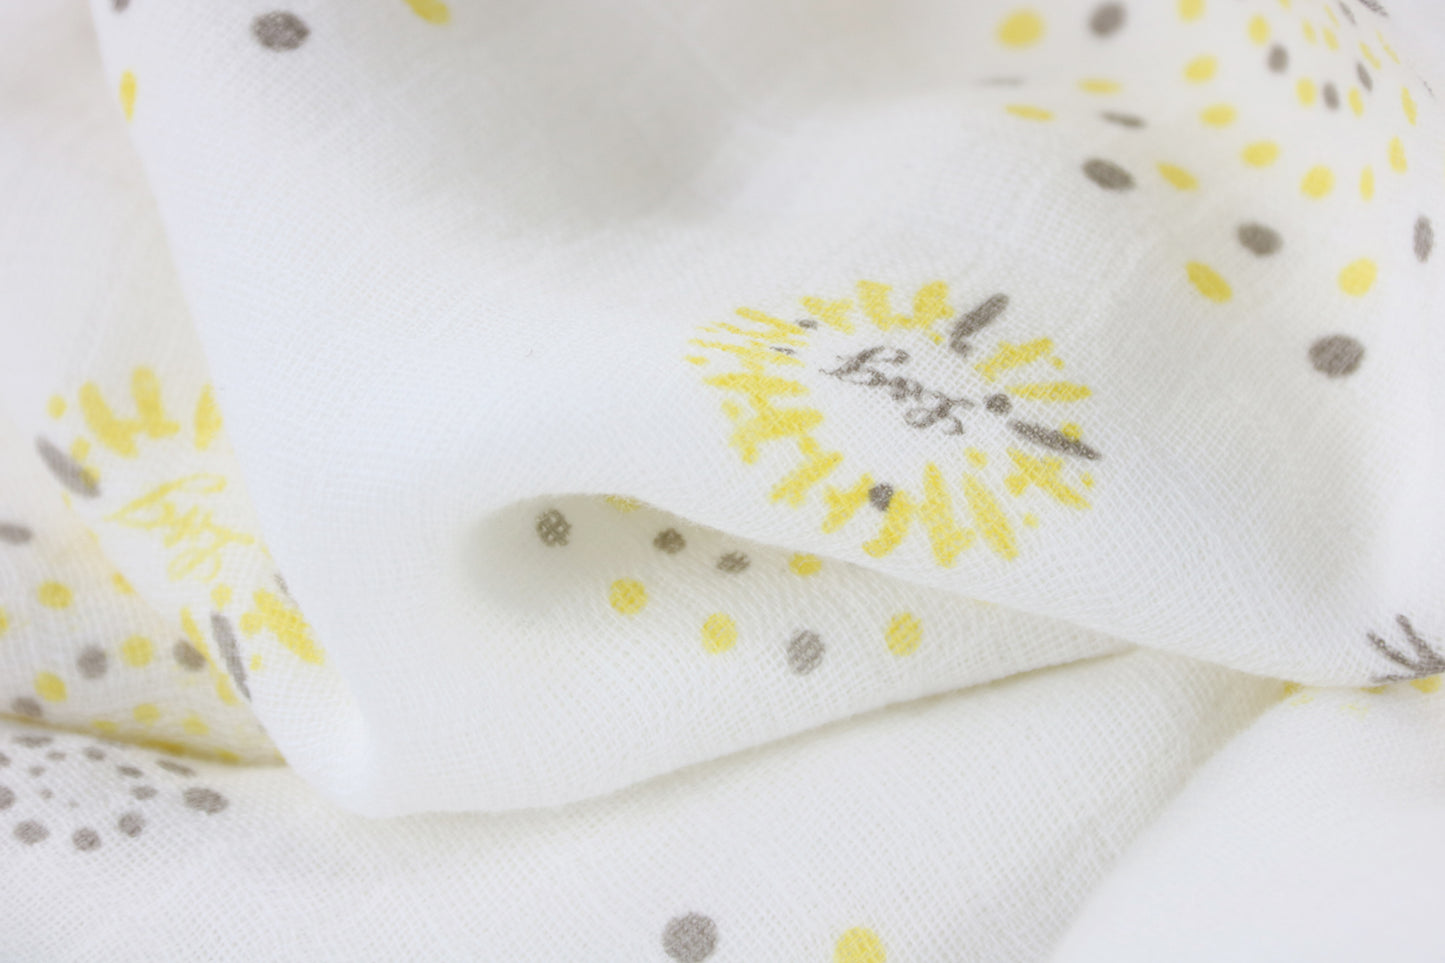 Cotton Muslin Swaddle Blankets /Washcloths (2pcs giftset)